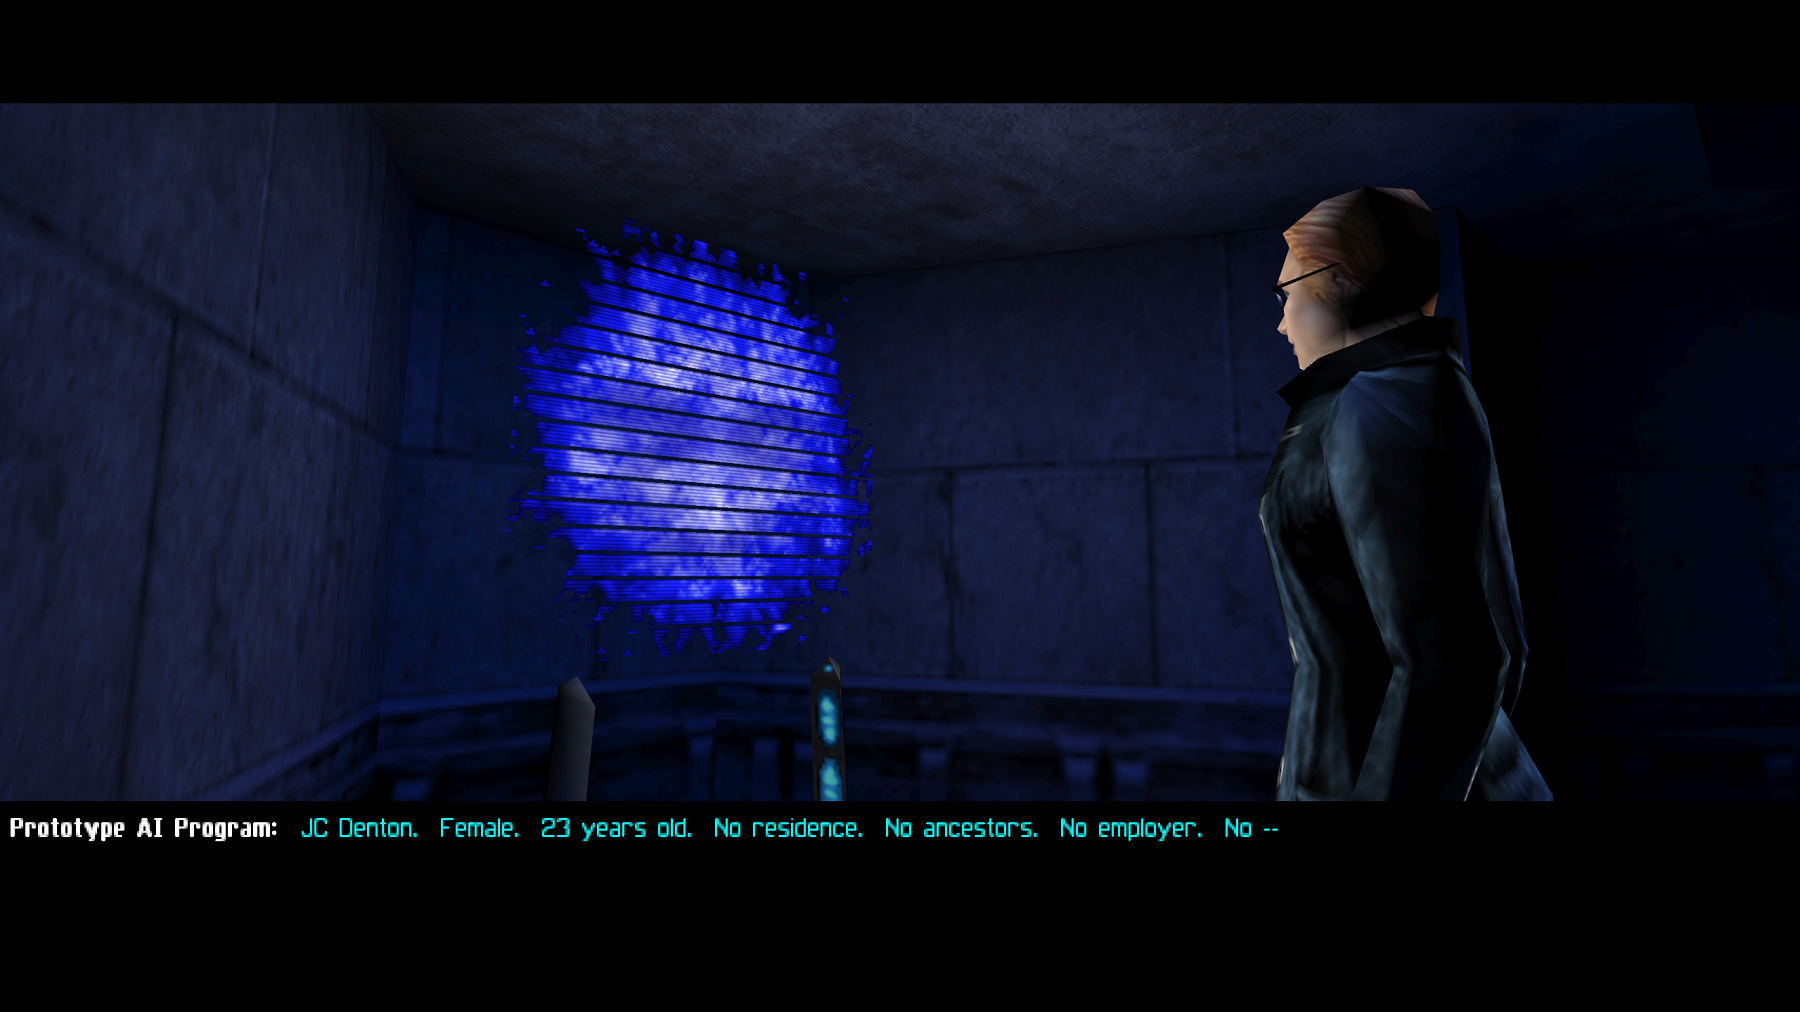 Screenshot from the original Deus Ex showing a female JC Denston.